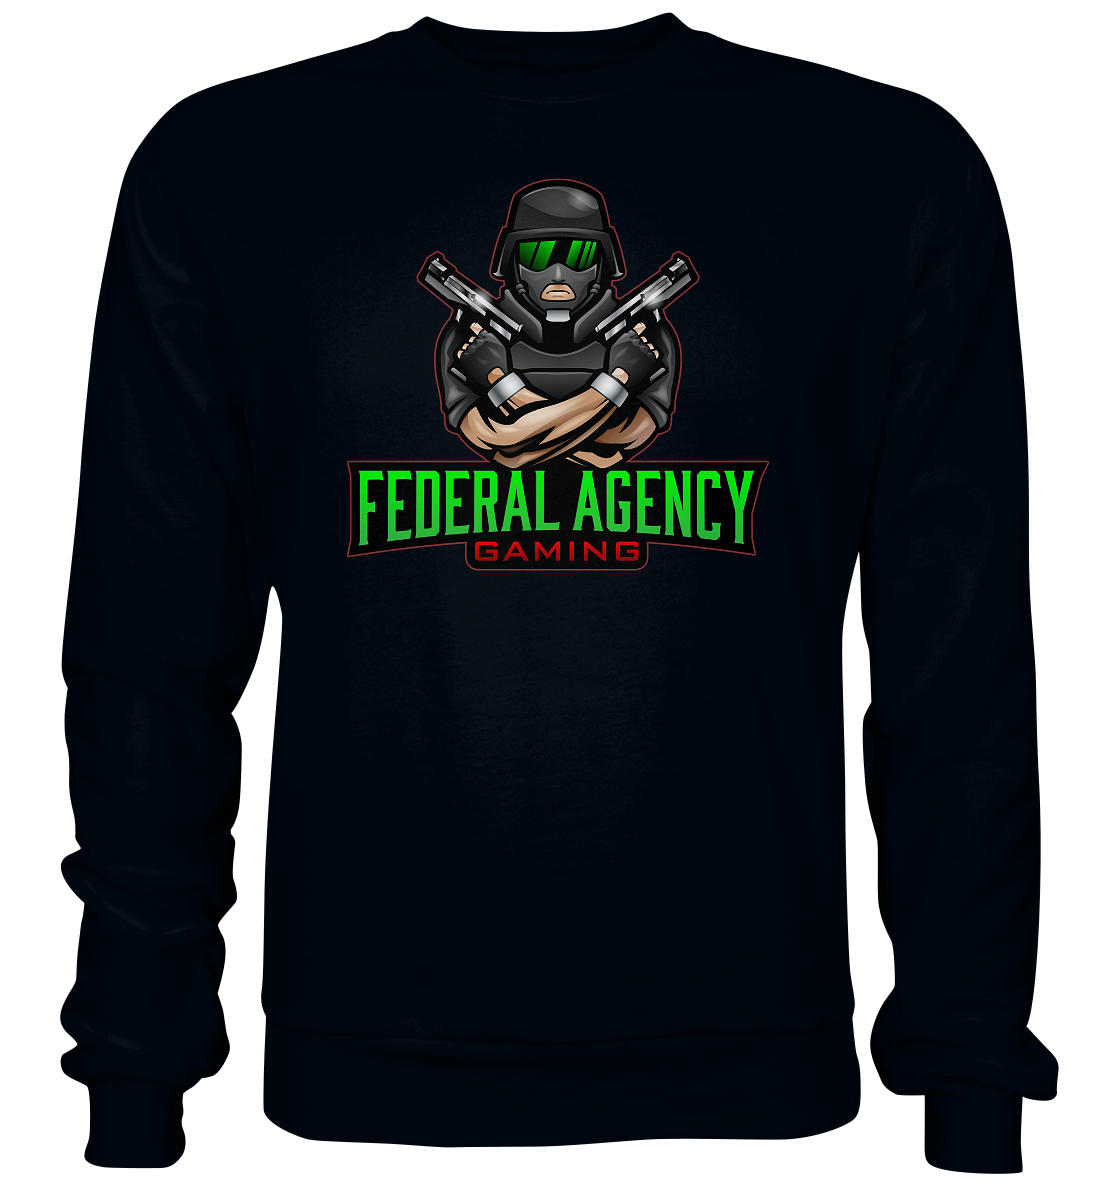 FEDERAL AGENCY GAMING - Basic Sweatshirt